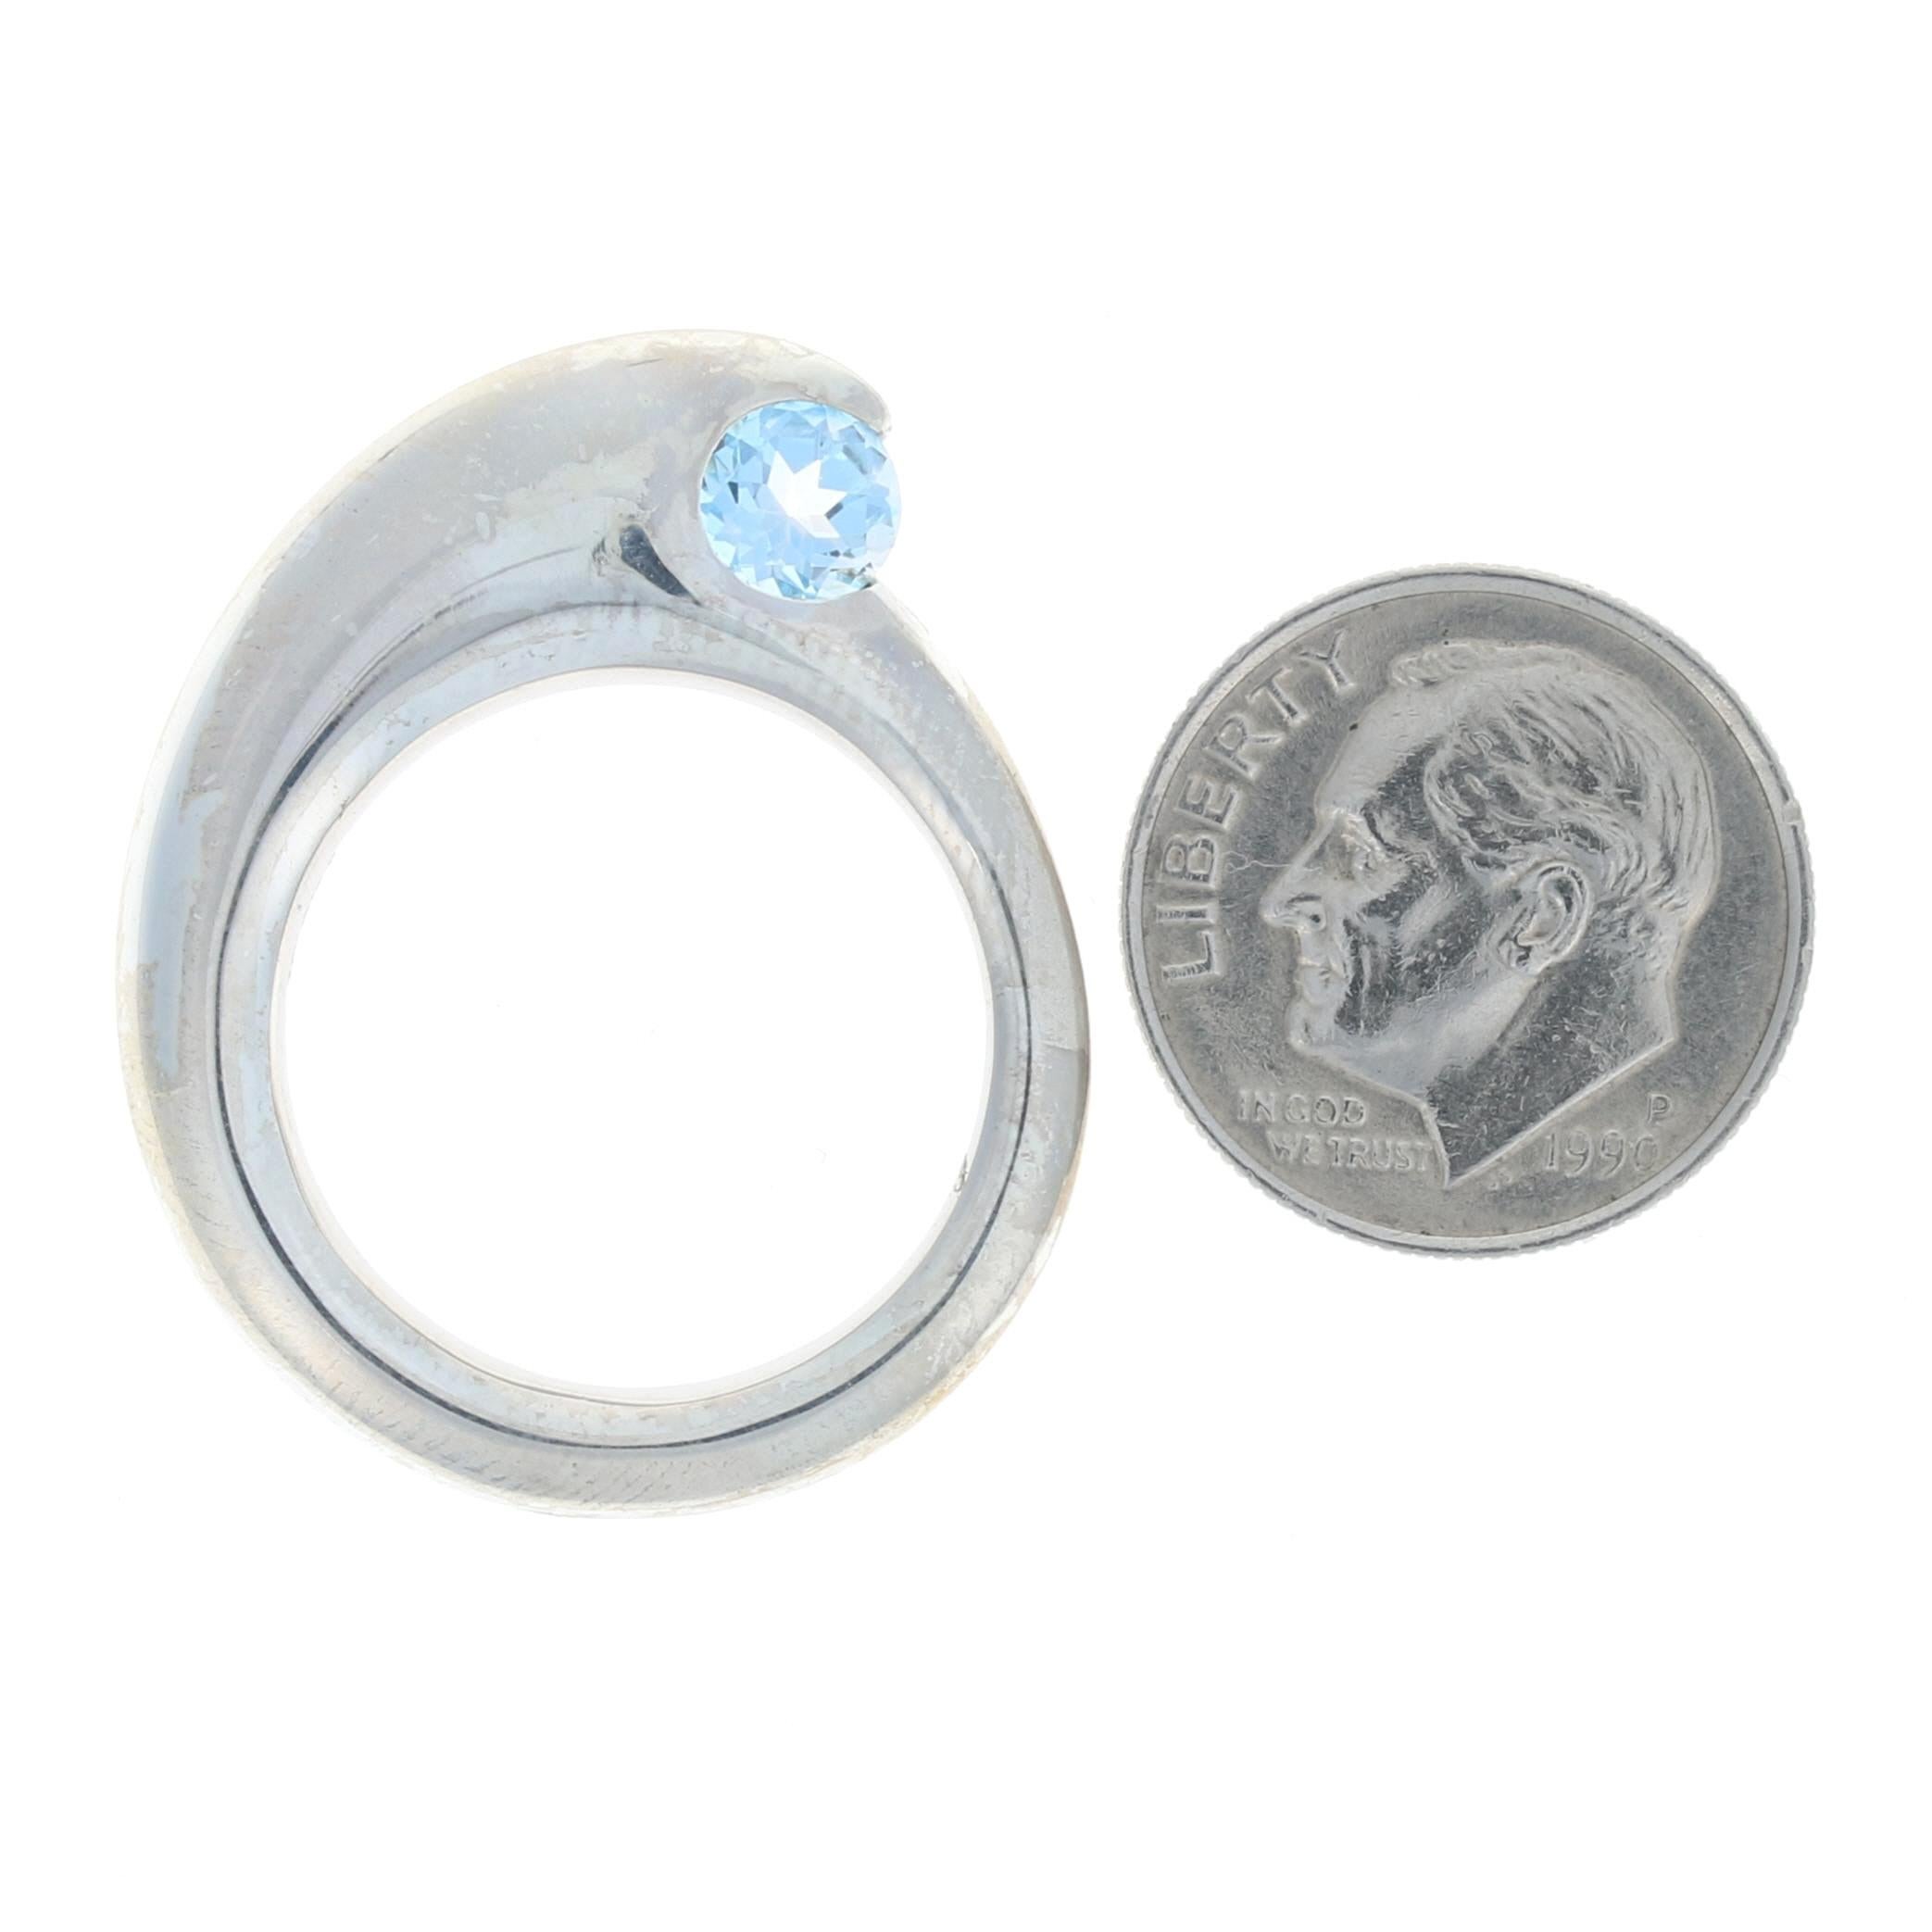 New Bastian Inverun Blue Topaz Ring / Pendant, Sterling Silver In New Condition For Sale In Greensboro, NC